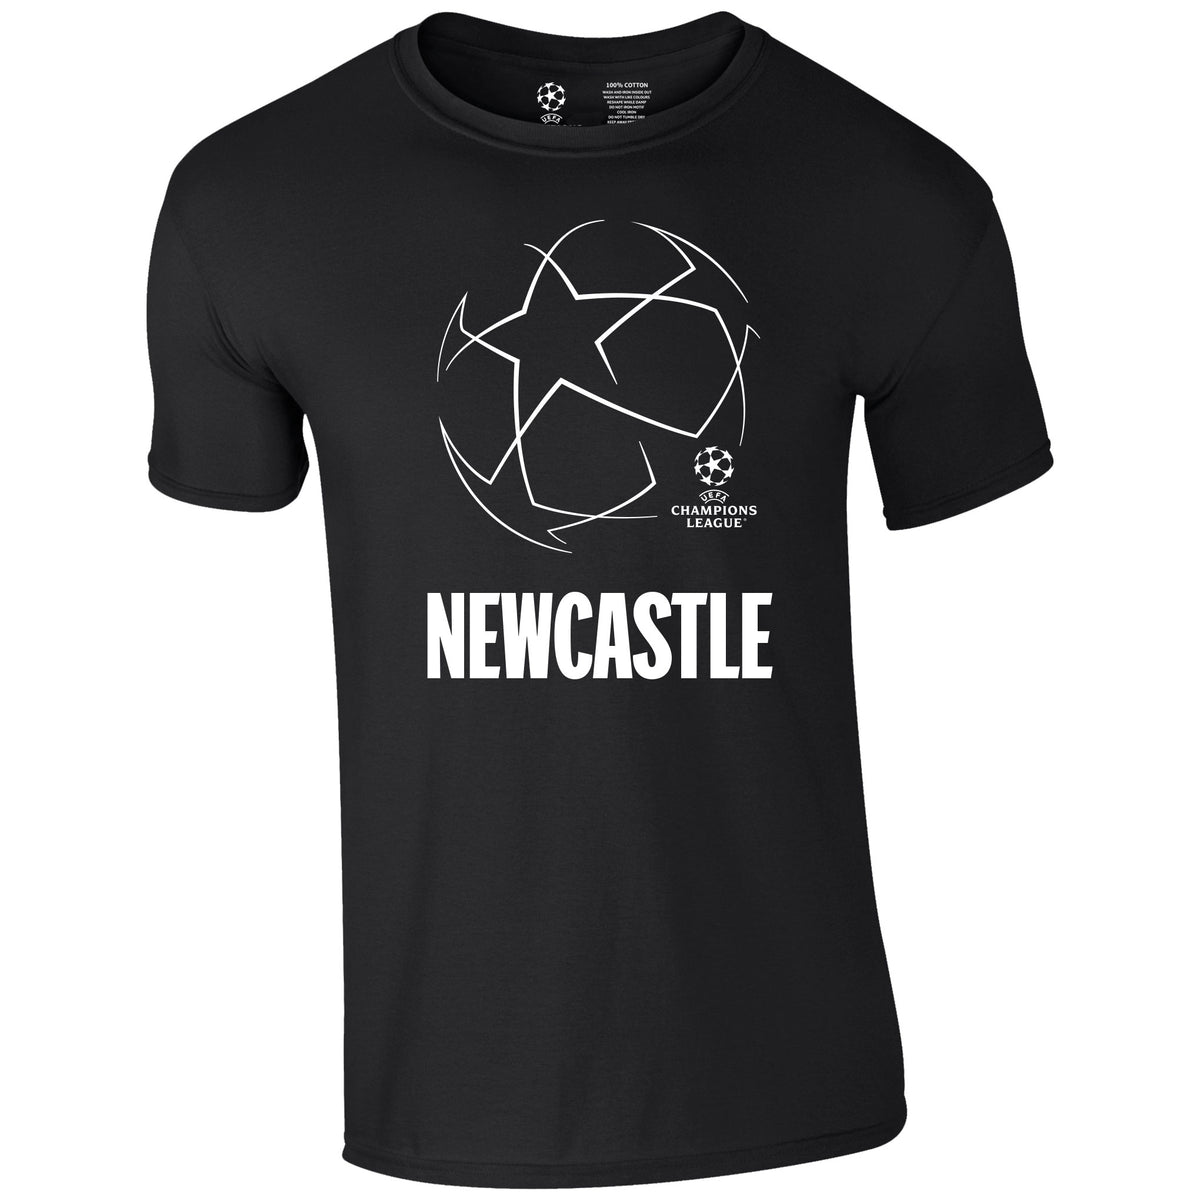 Champions League Starball Newcastle City T-Shirt Black